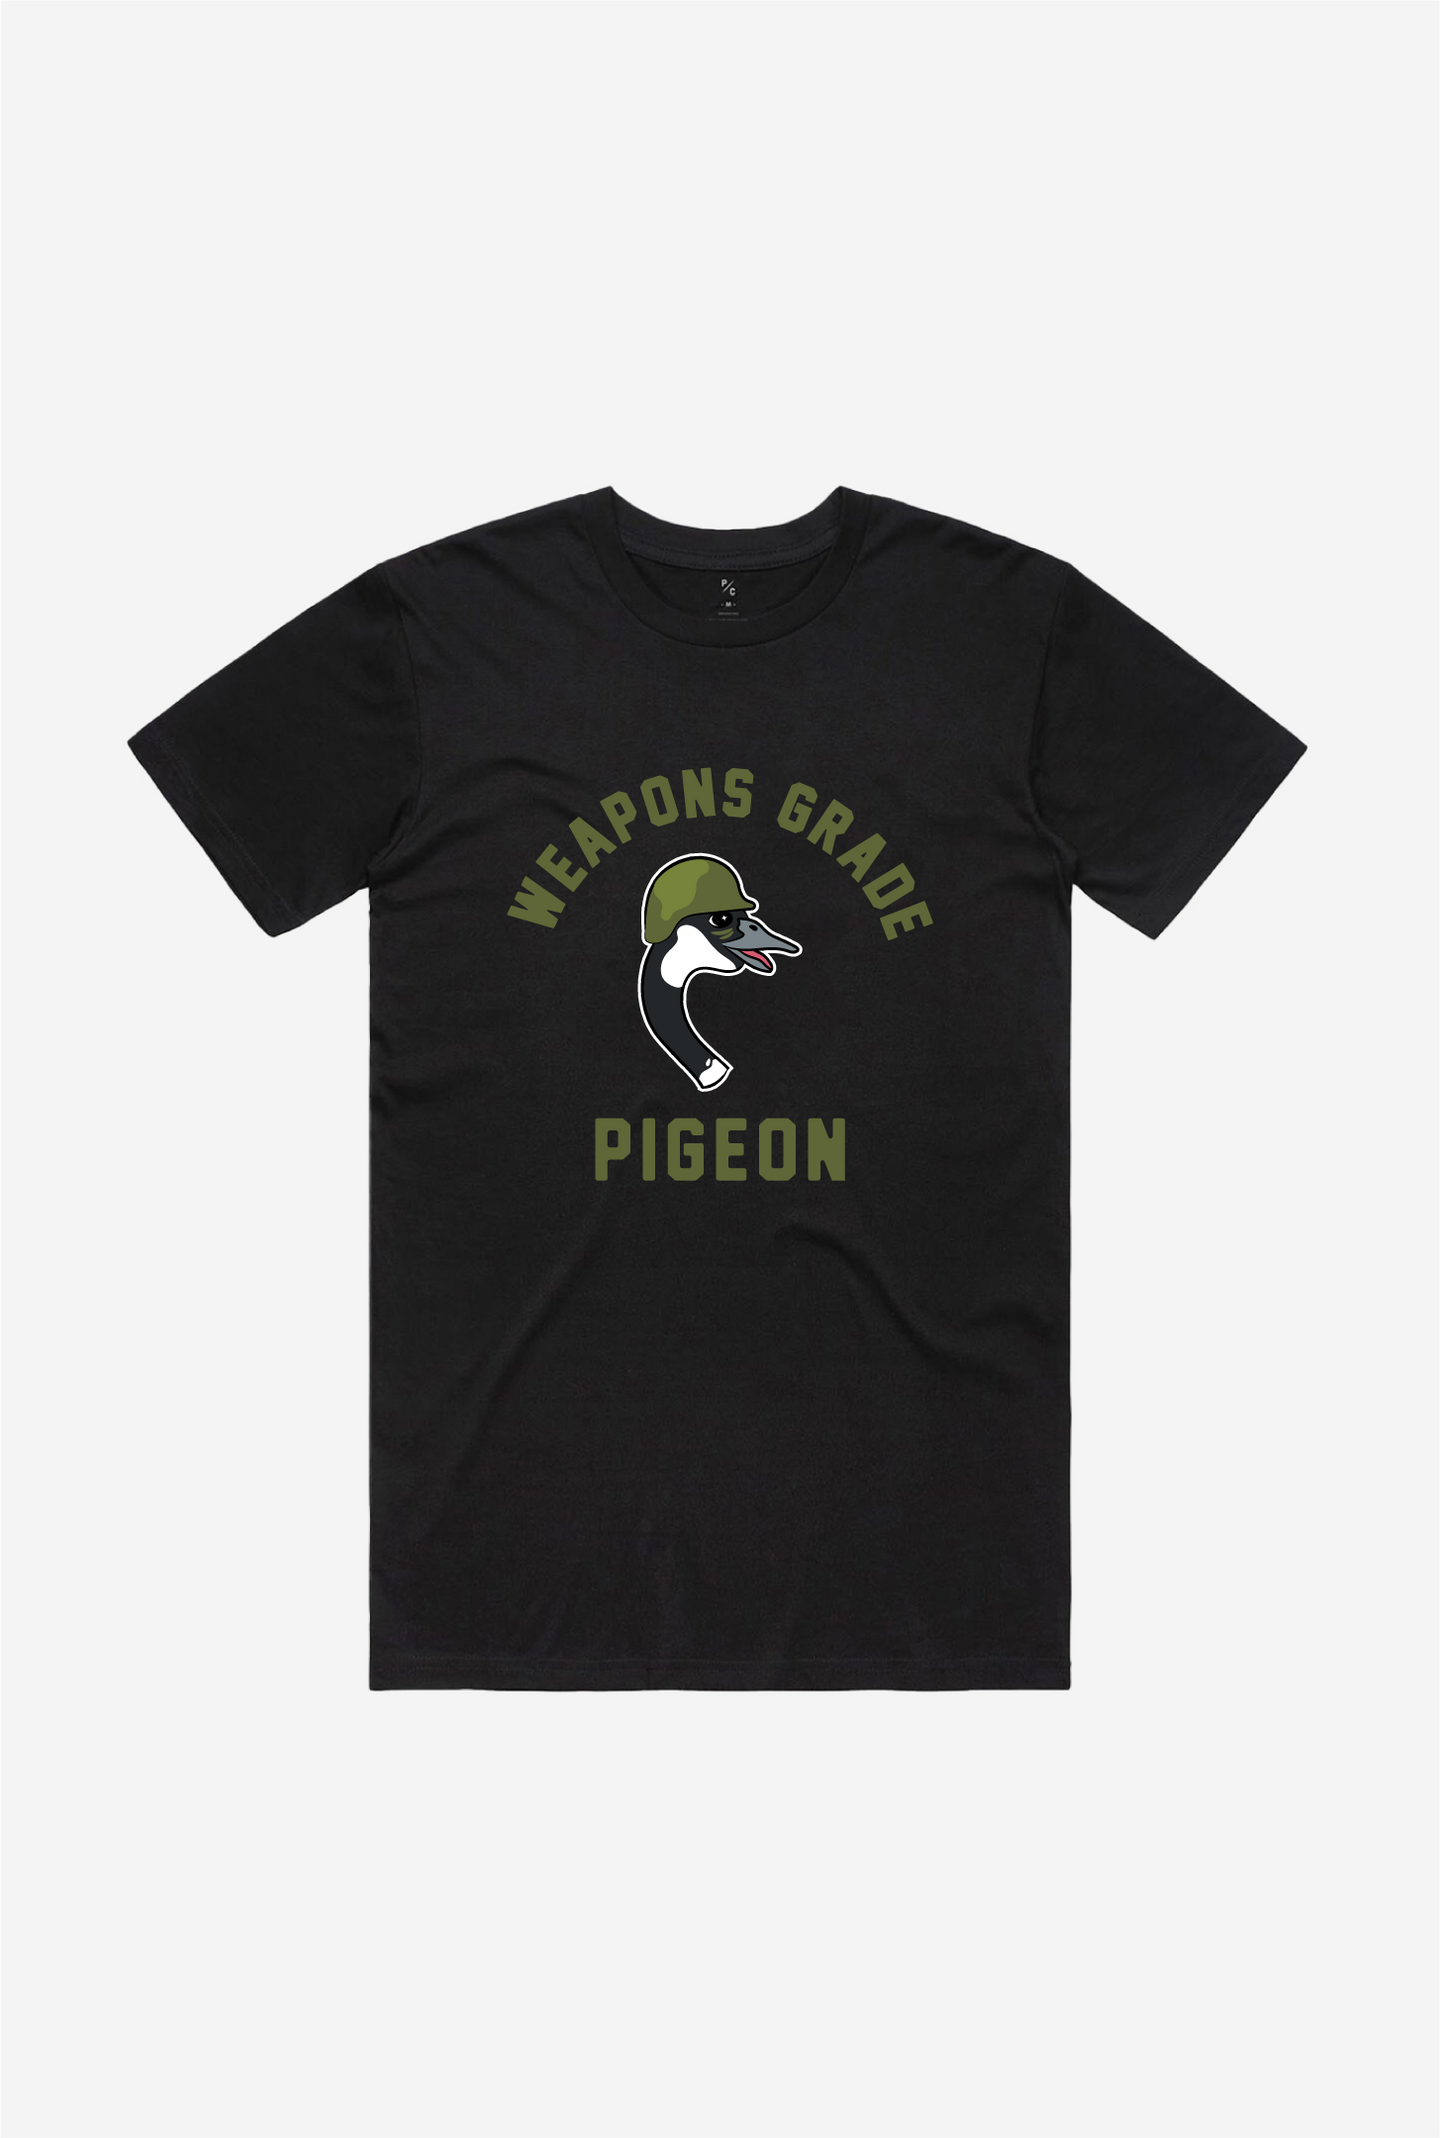 Weapons Grade Pigeon T-Shirt - Black